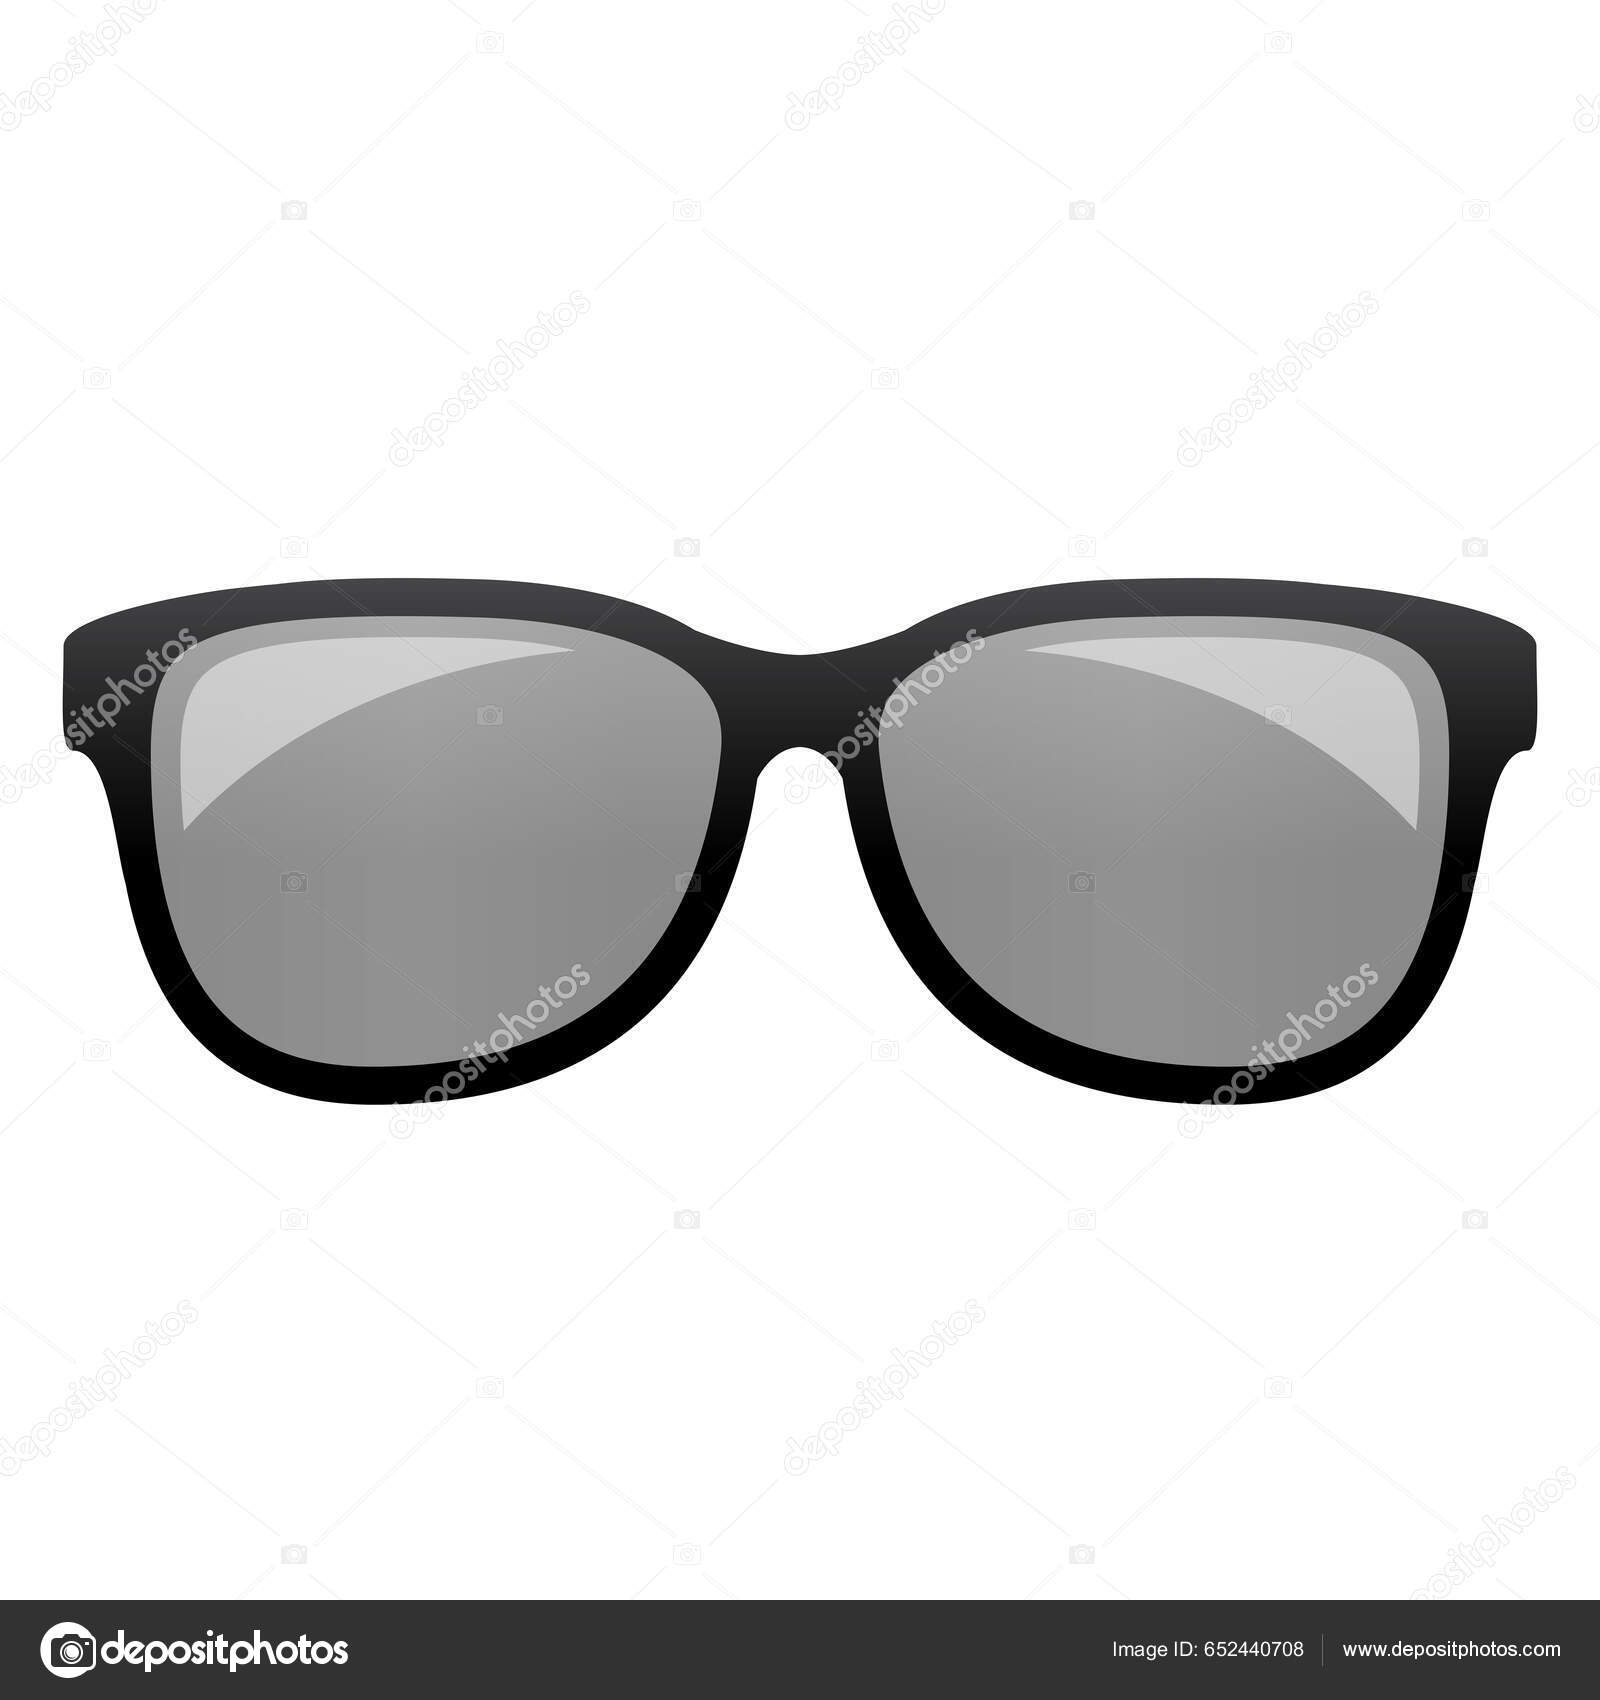 https://st5.depositphotos.com/1431107/65244/v/1600/depositphotos_652440708-stock-illustration-modern-sunglasses-vector-illustration.jpg